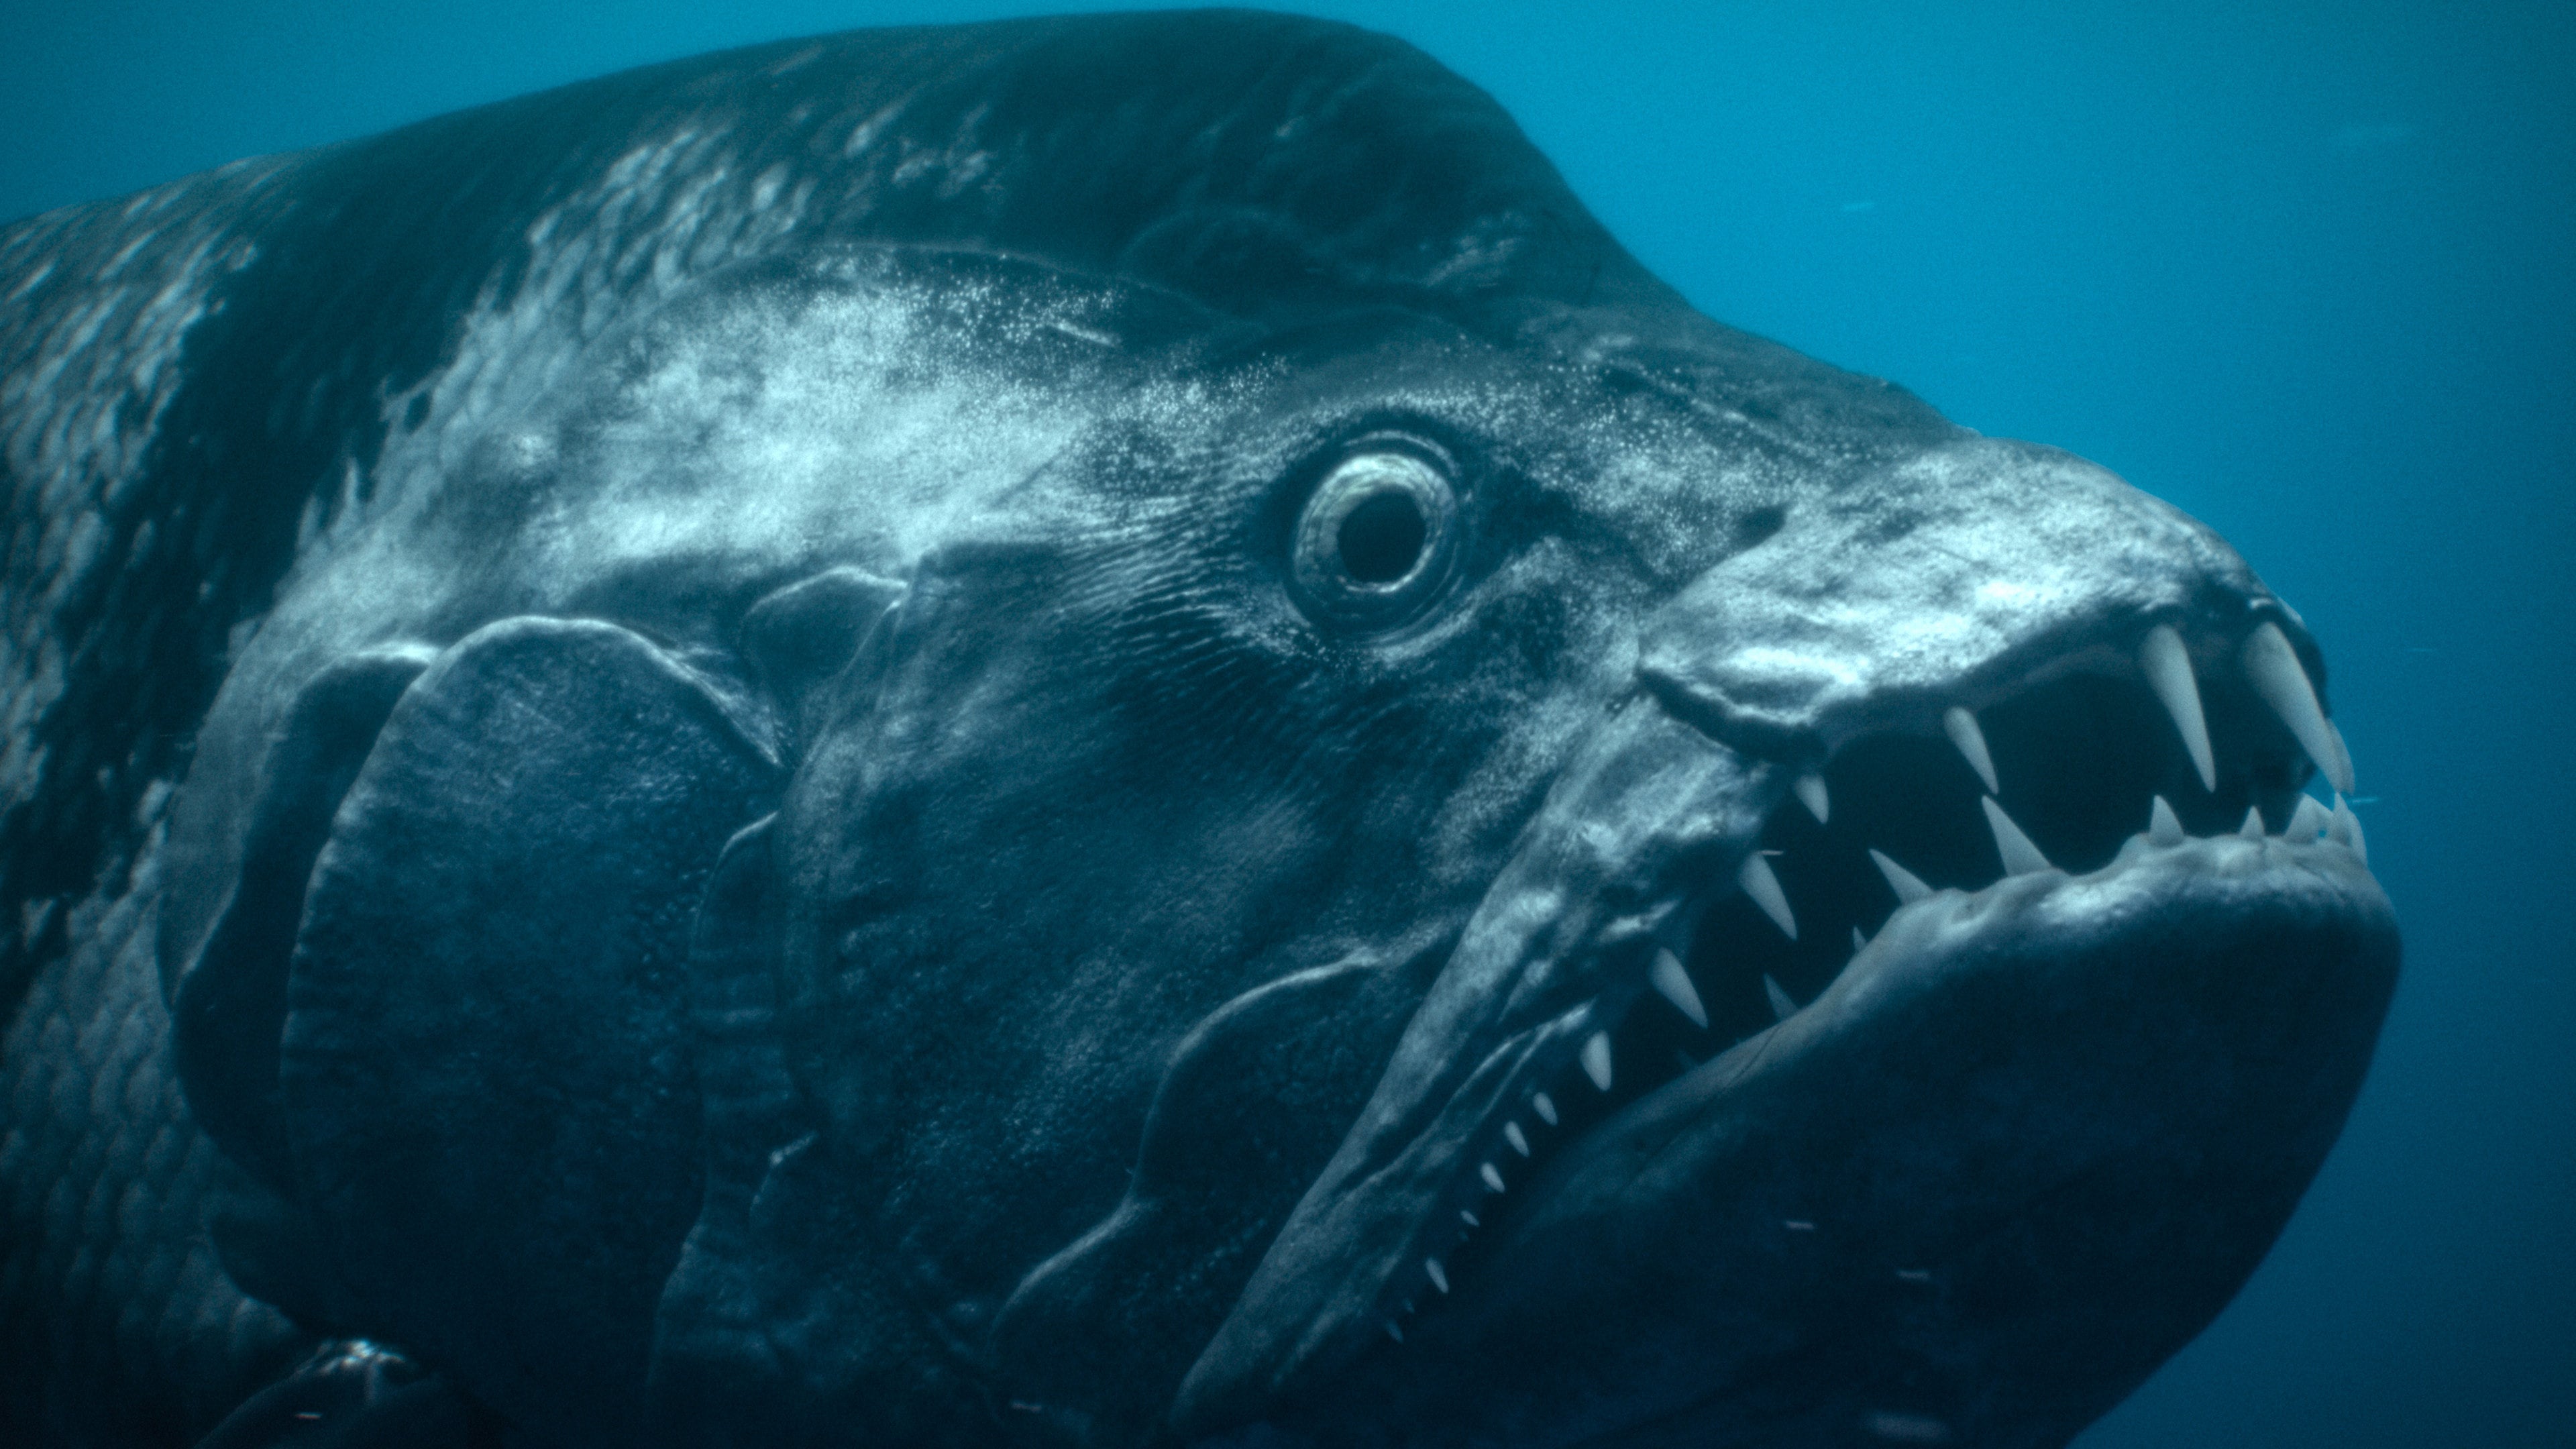 A CGI rendering of the bony fish Xiphactinus. (Image: Apple TV+)